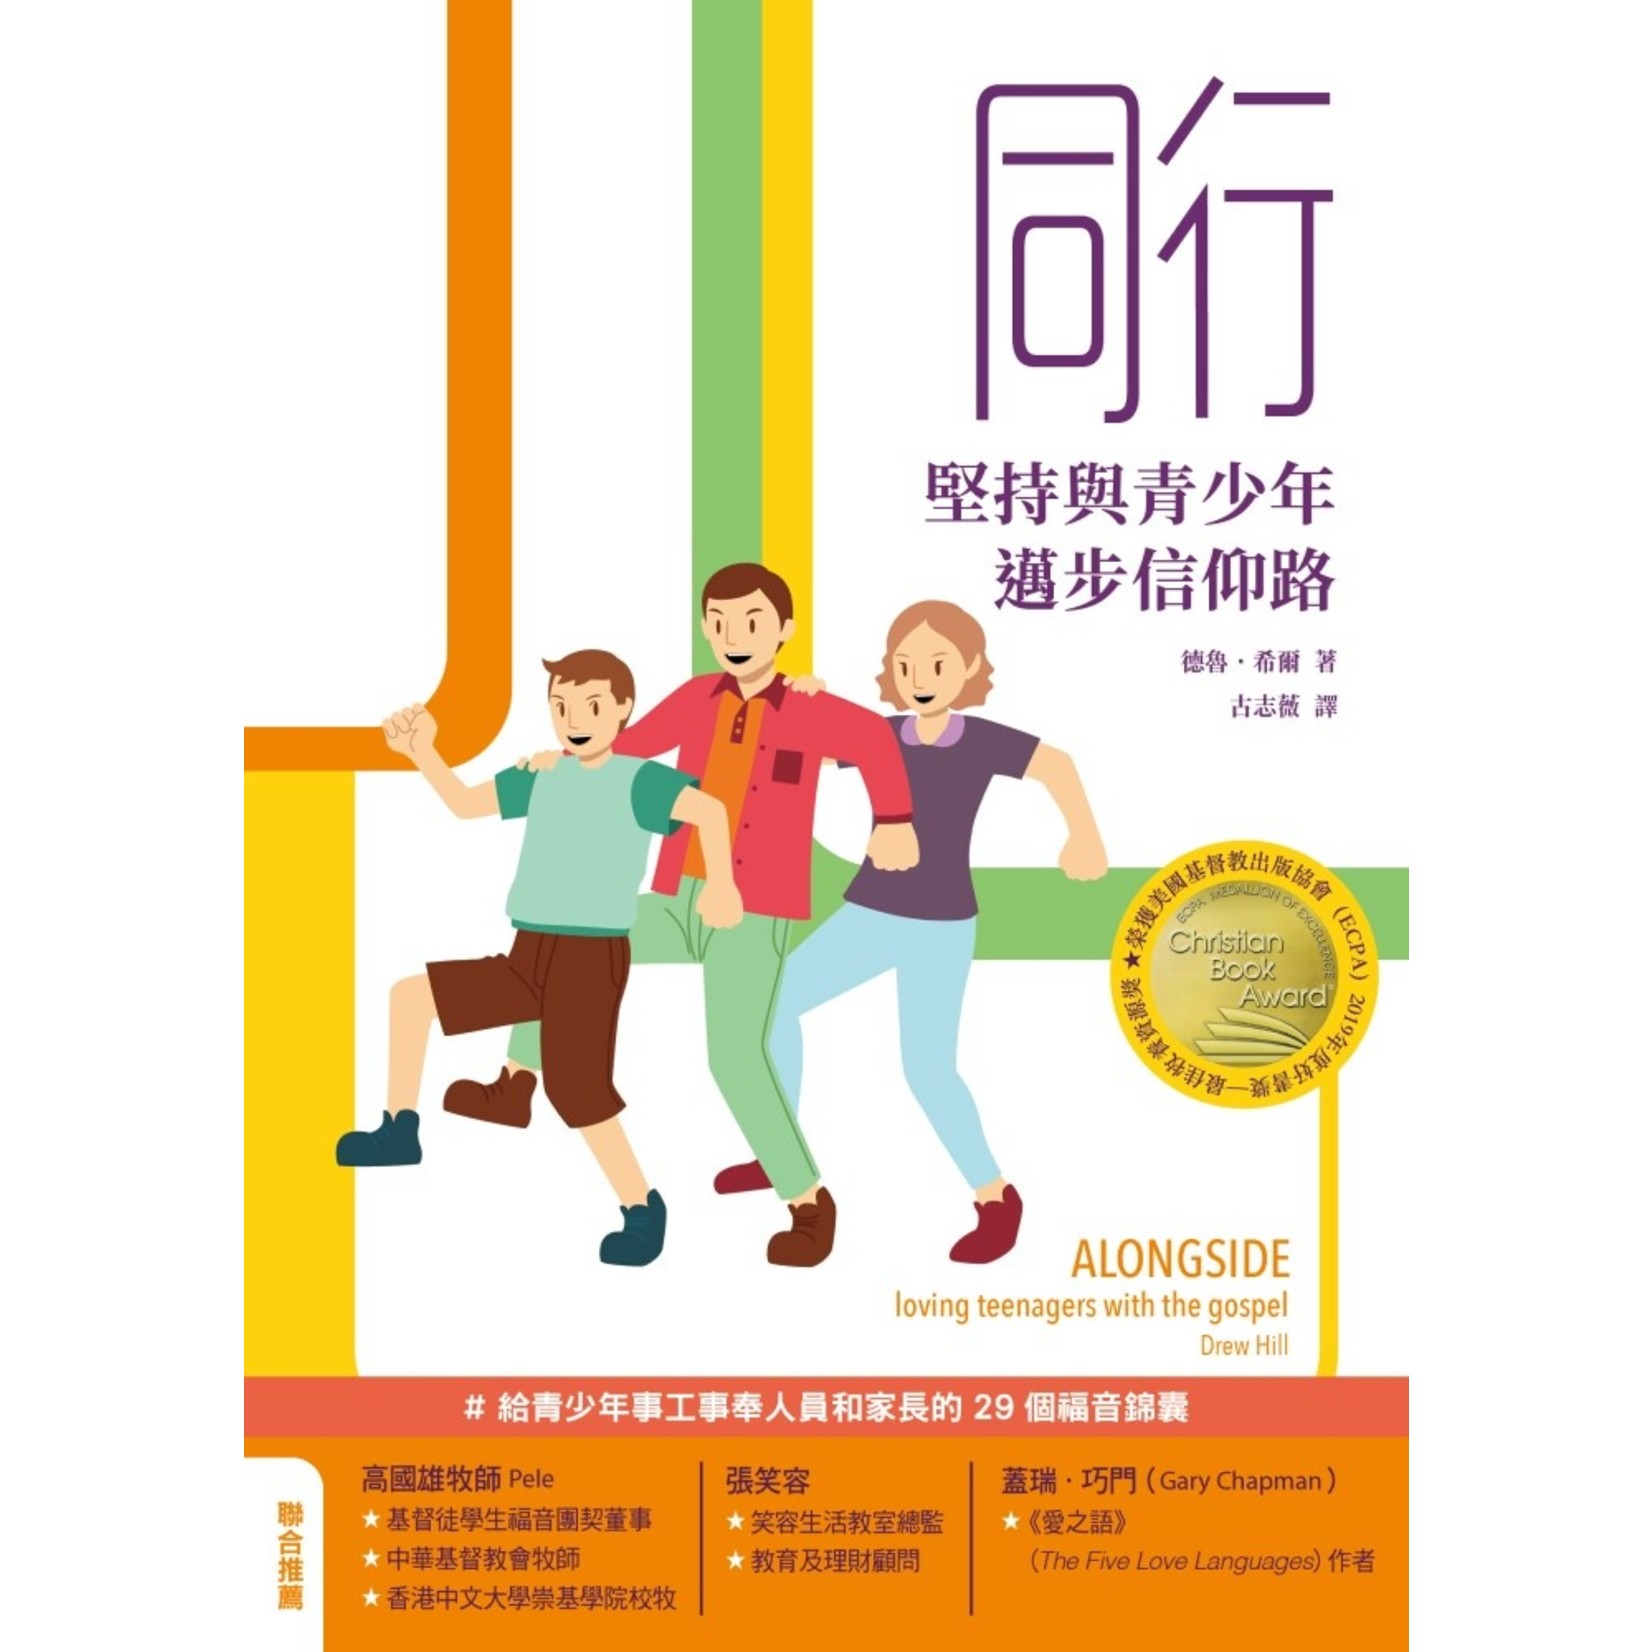 基督教文藝(香港) Chinese Christian Literature Council 同行：堅持與青少年邁步信仰路 Alongside: loving teenagers with the gospel